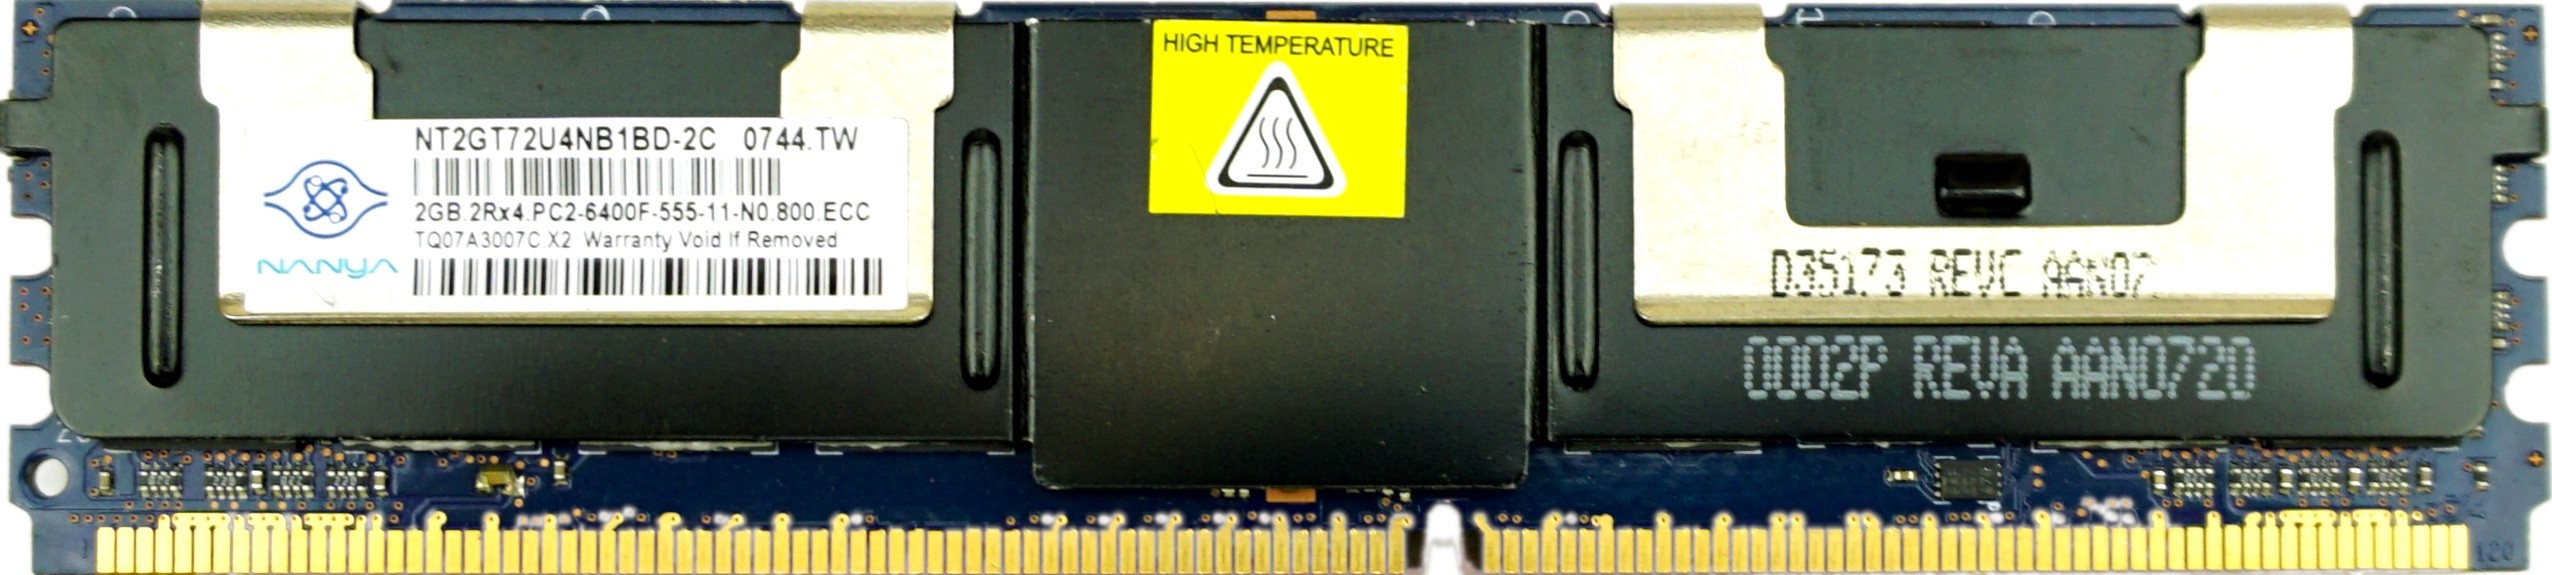 Unbranded - 2GB PC2-6400F (DDR2-800Mhz, 2RX4)